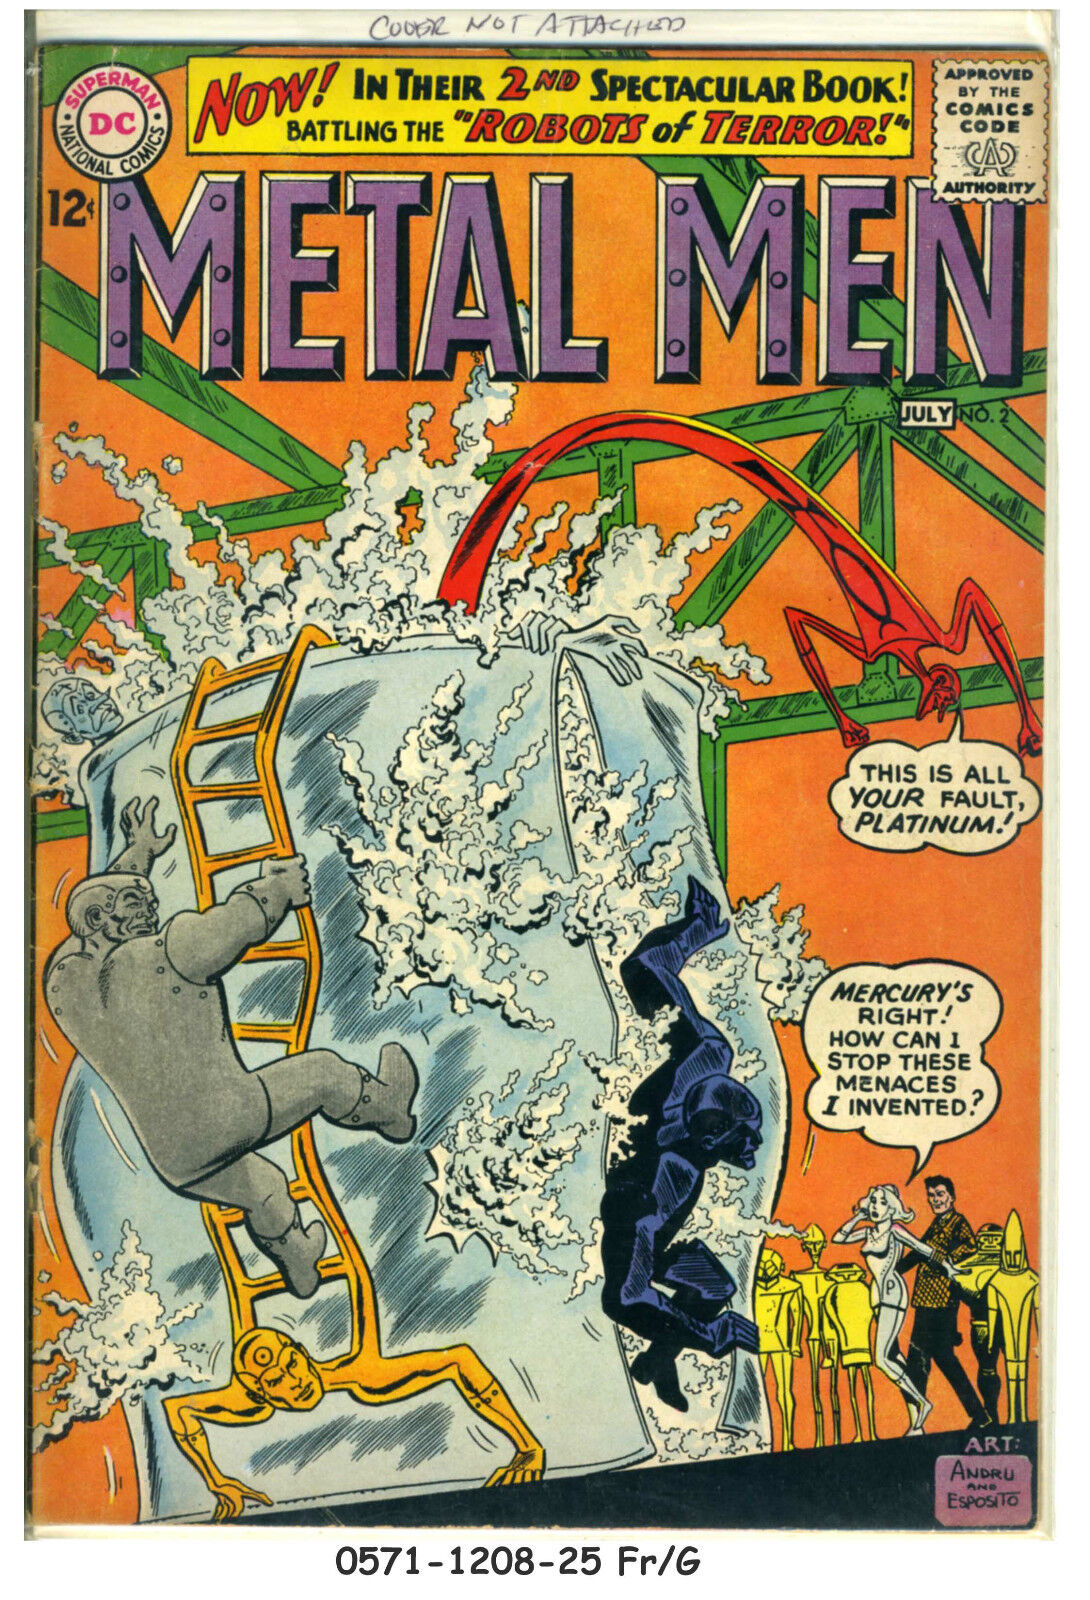 Metal Men #2 © June-July 1963 DC Comics  fr/g